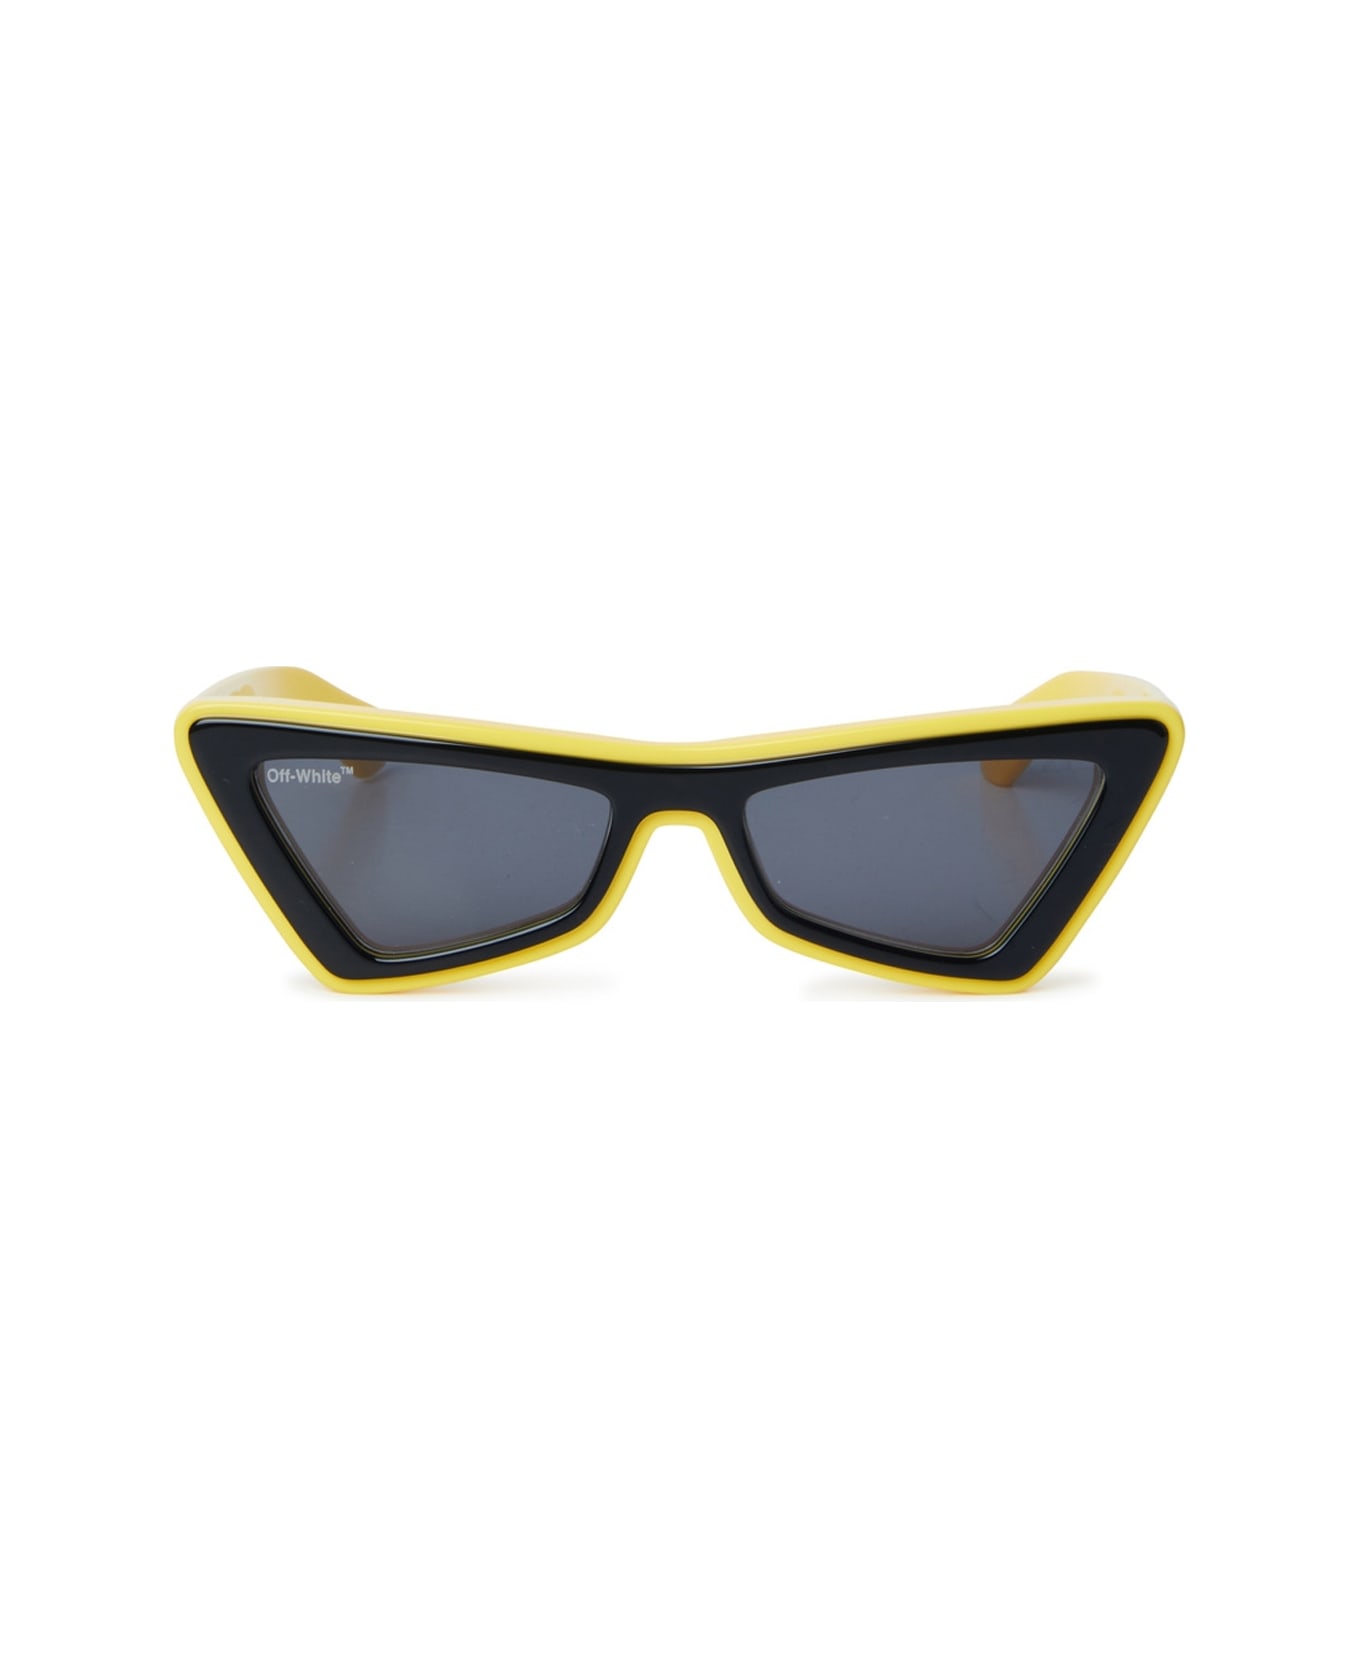 Off-White Artemisia Sunglasses - Giallo サングラス